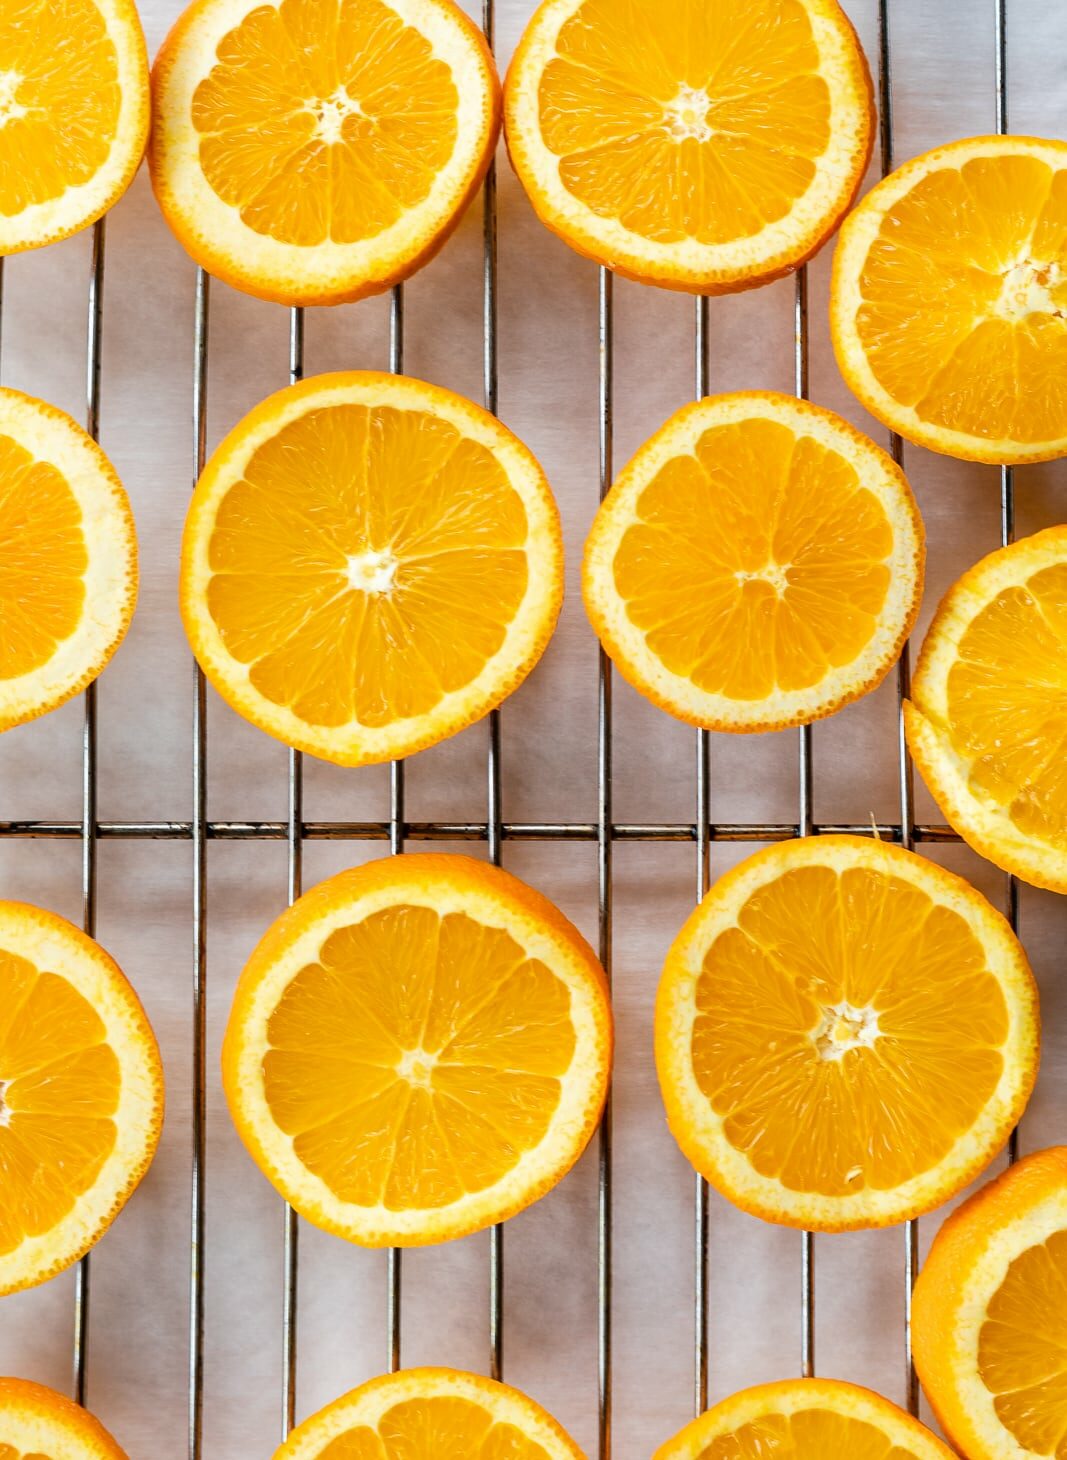 How to pre-freeze oranges